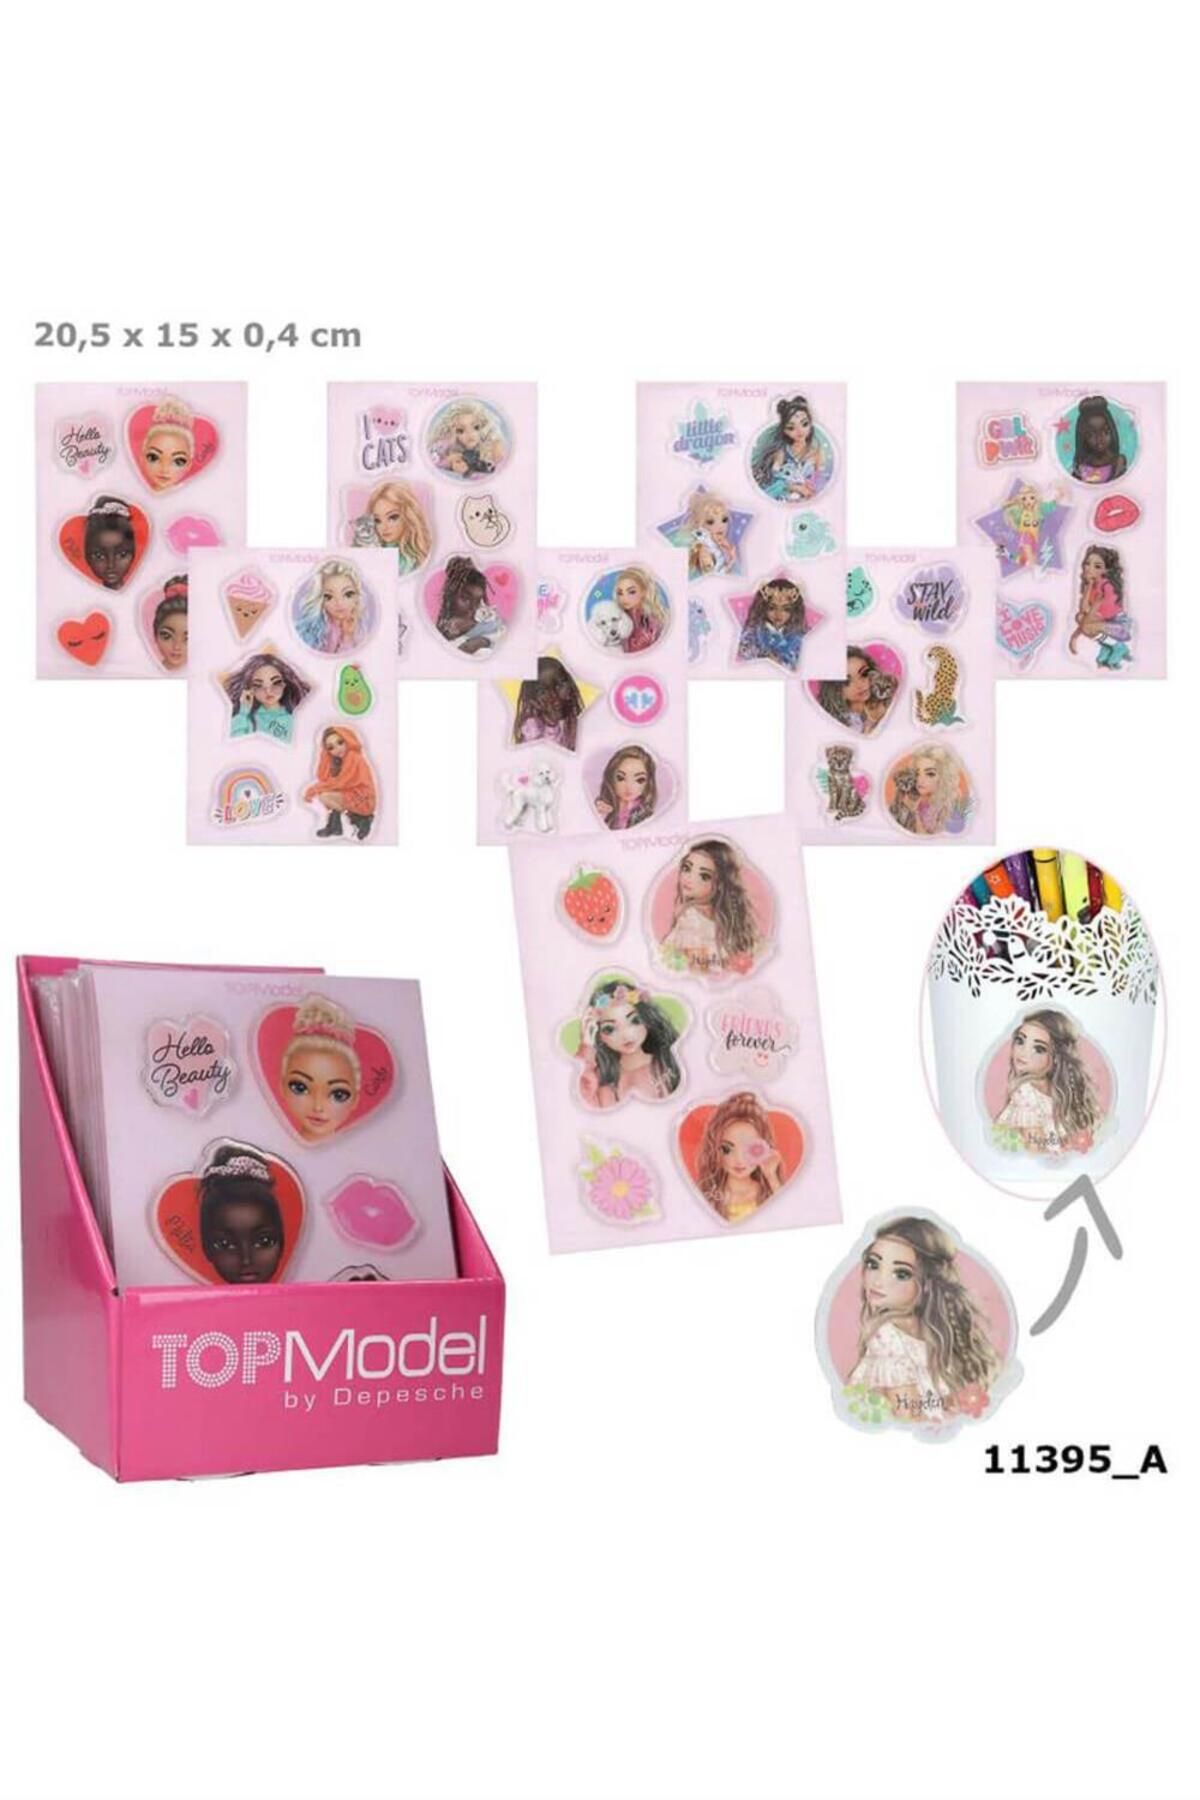 Top Model Glibbies Stickers 0411395-A